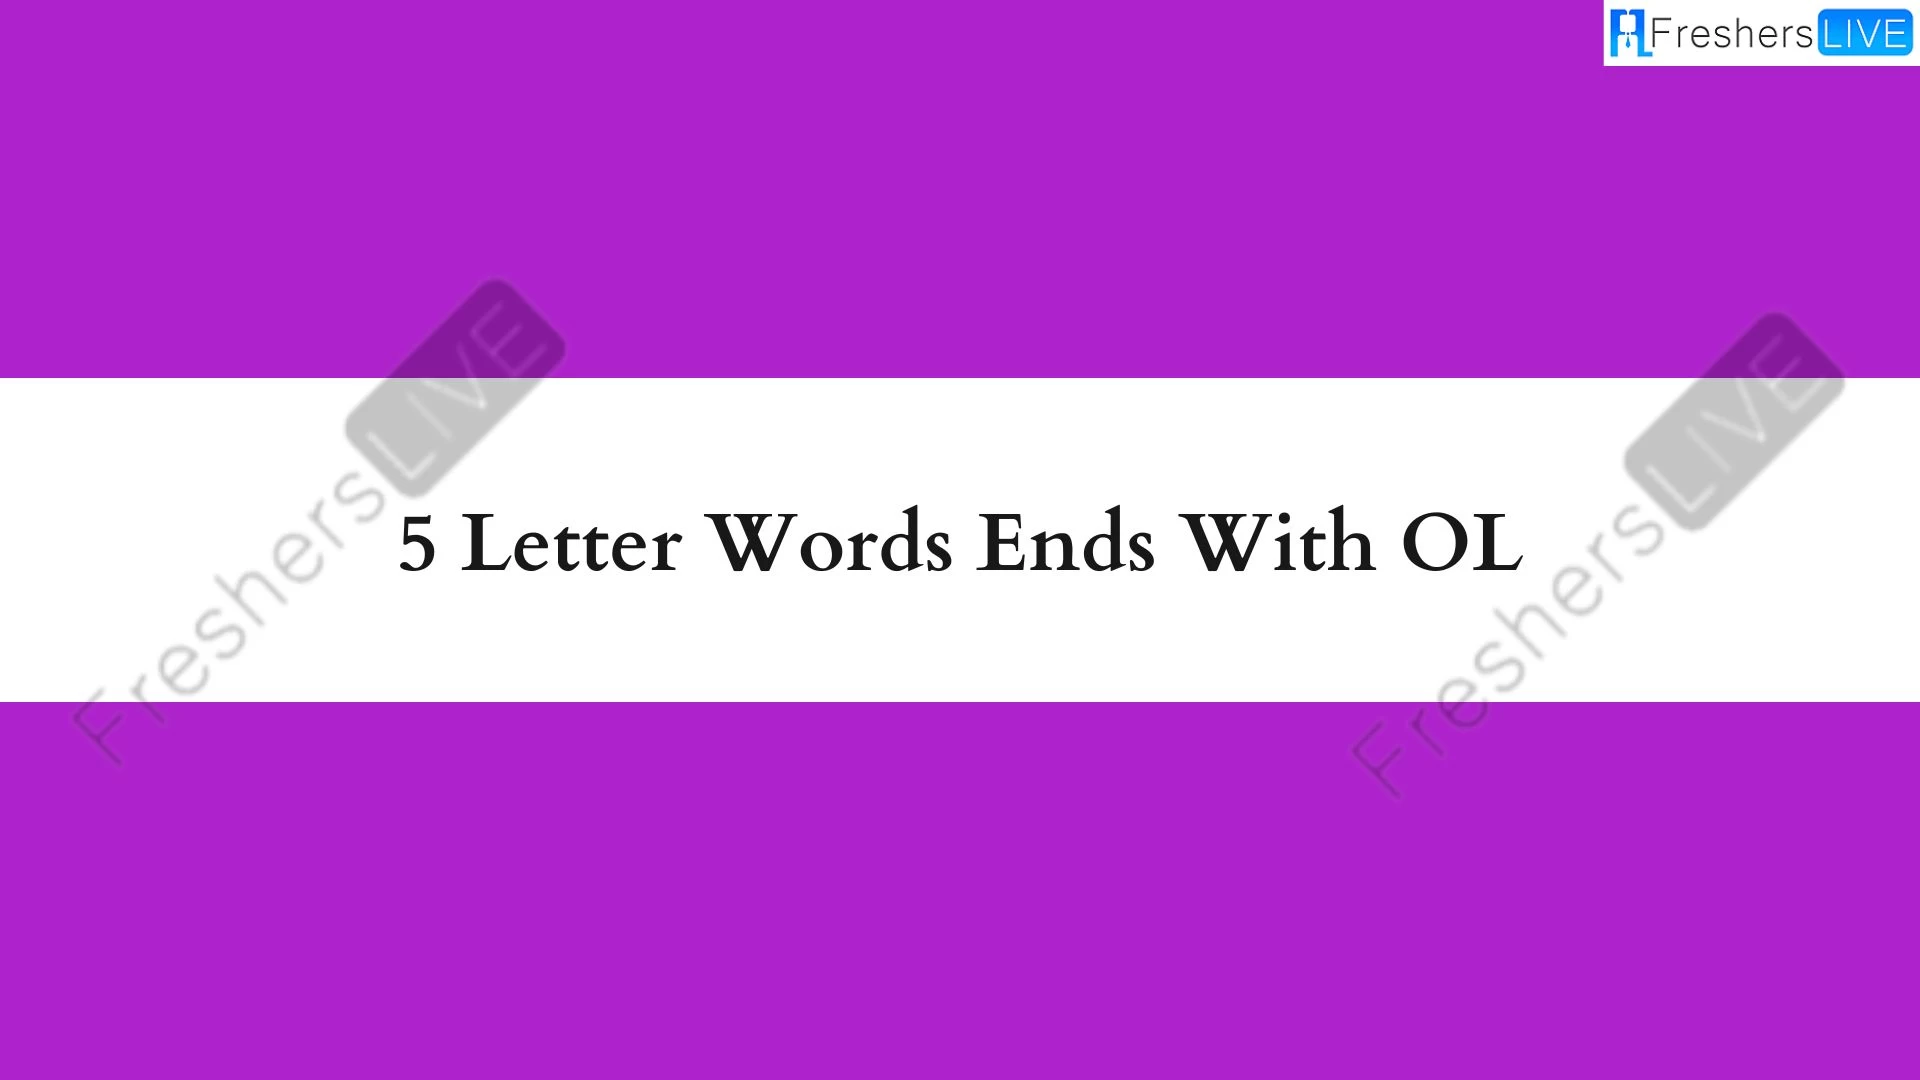 Palabras de 5 letras que terminen en OL, Lista de palabras de 5 letras que terminen en OL